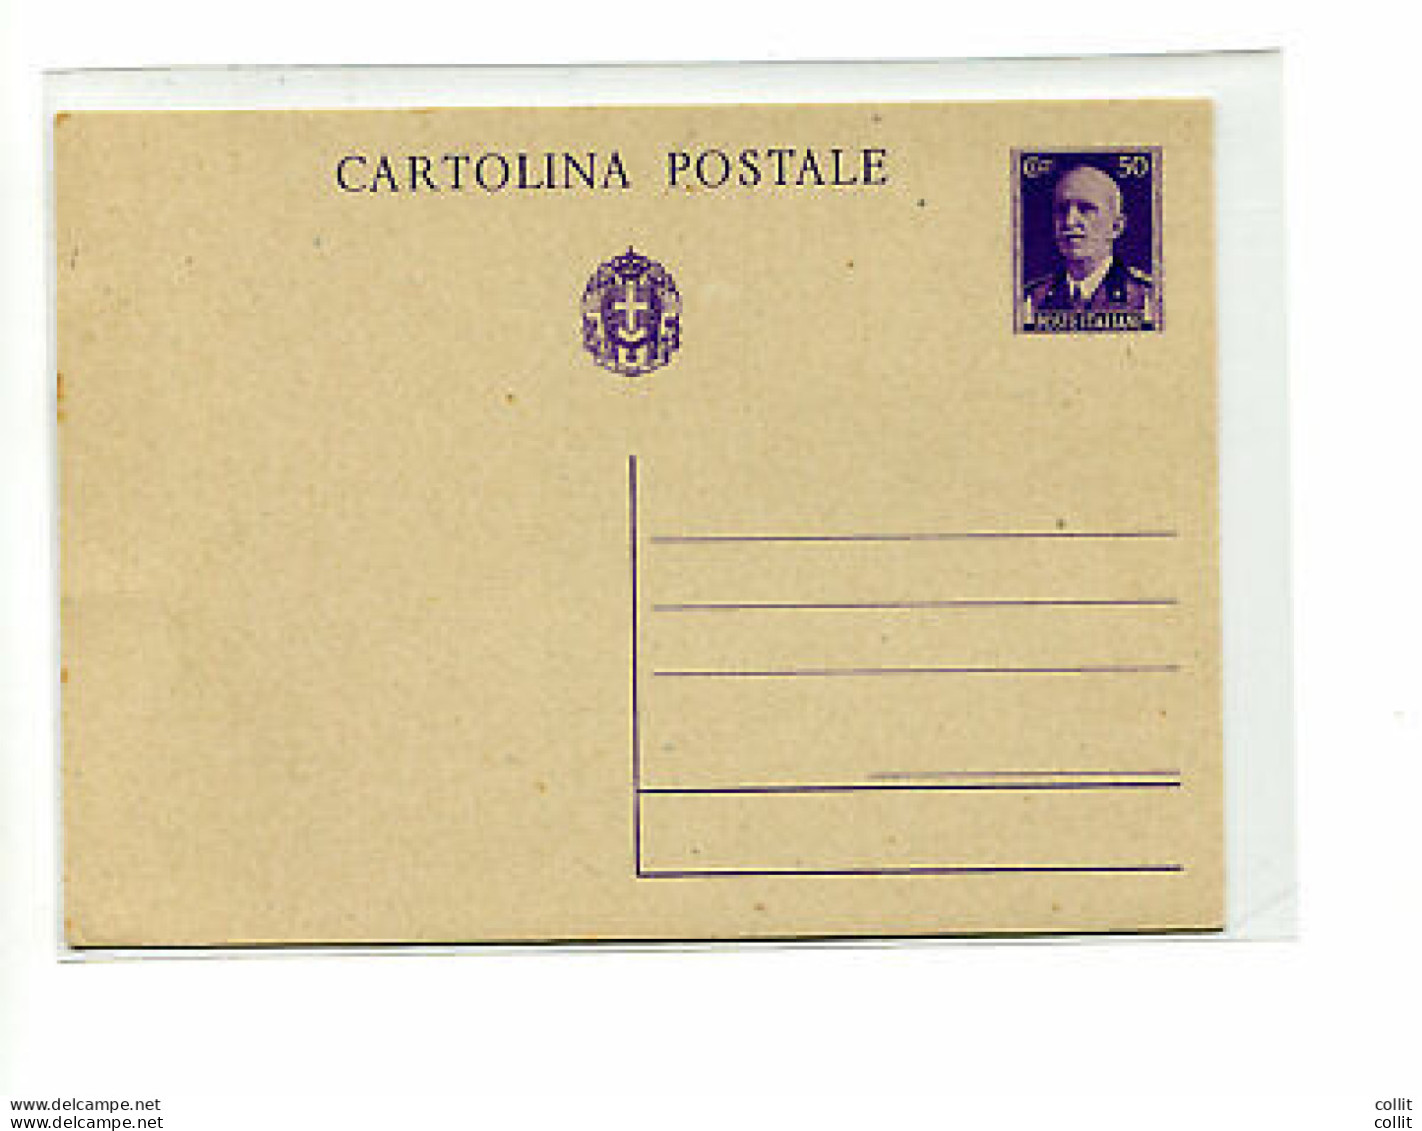 Cartolina Postale Per L'Africa Orientale C. 50 Impero N. C 95 - Interi Postali